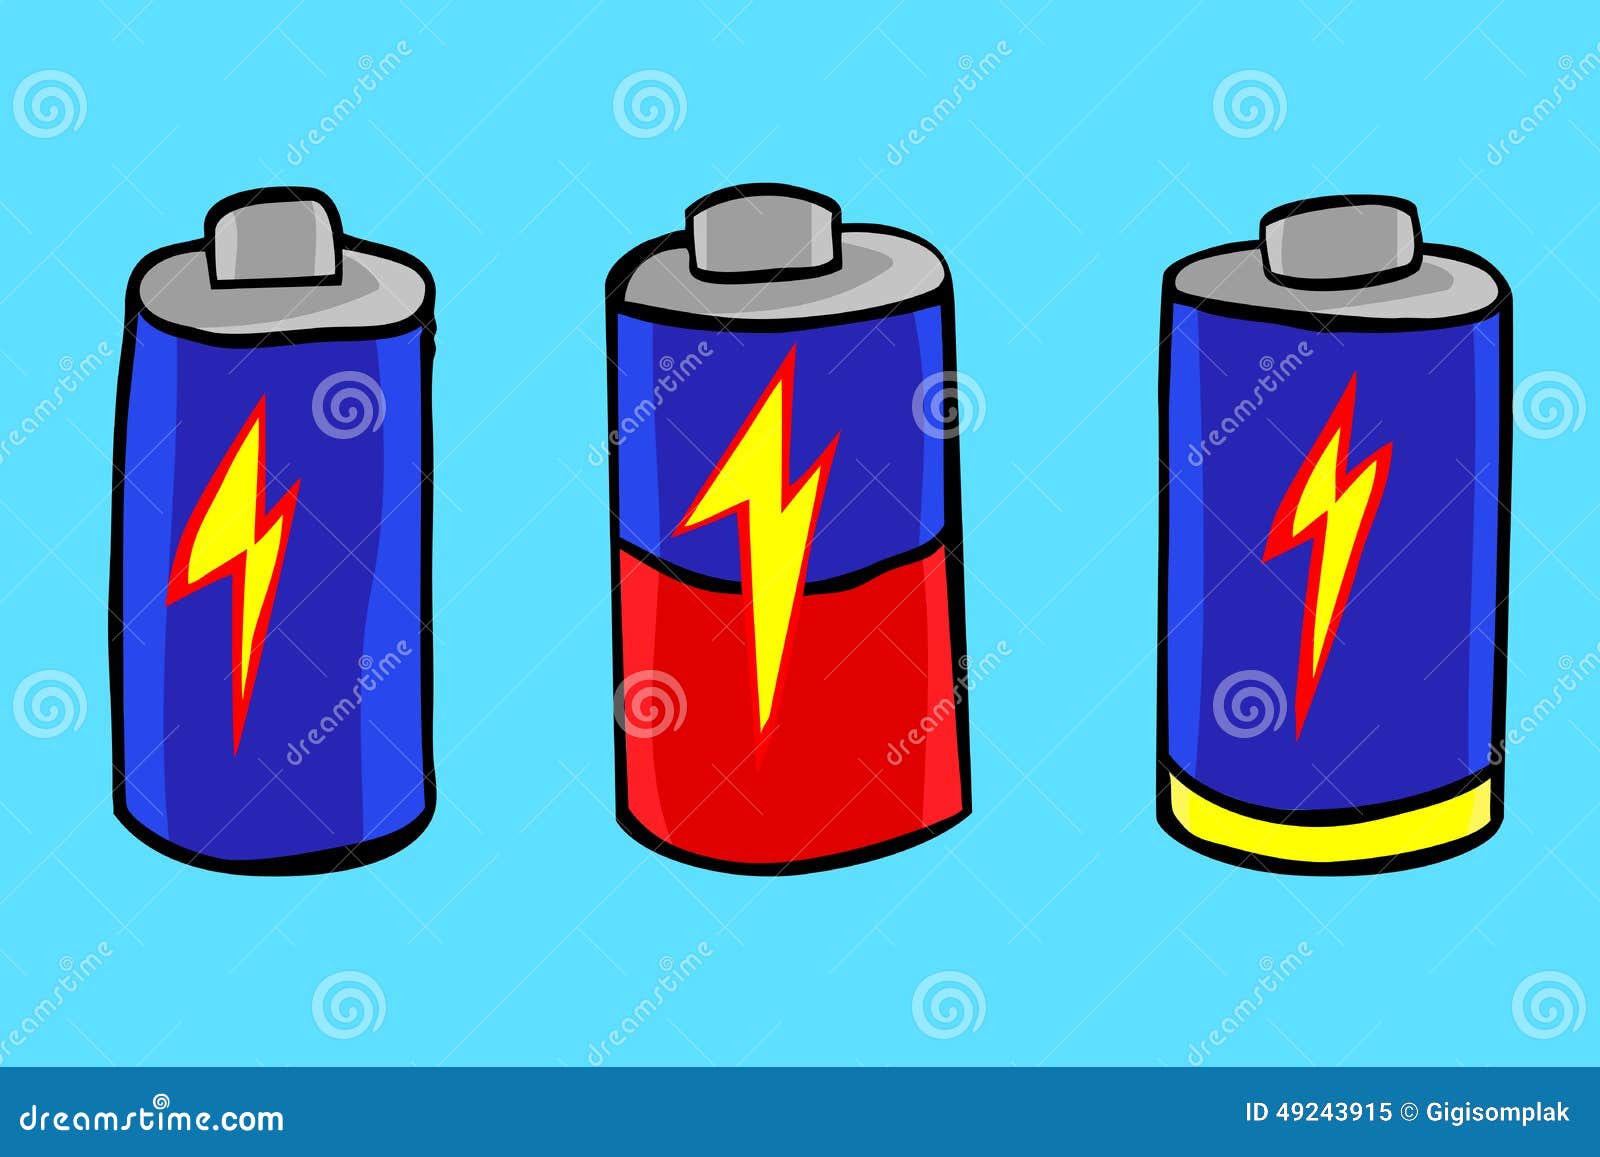 30 батарея рисунок. "Фосфорные батареи" иллюстрация. Фейерверки батарея рисунок. Стрелковая батарея рисунок.